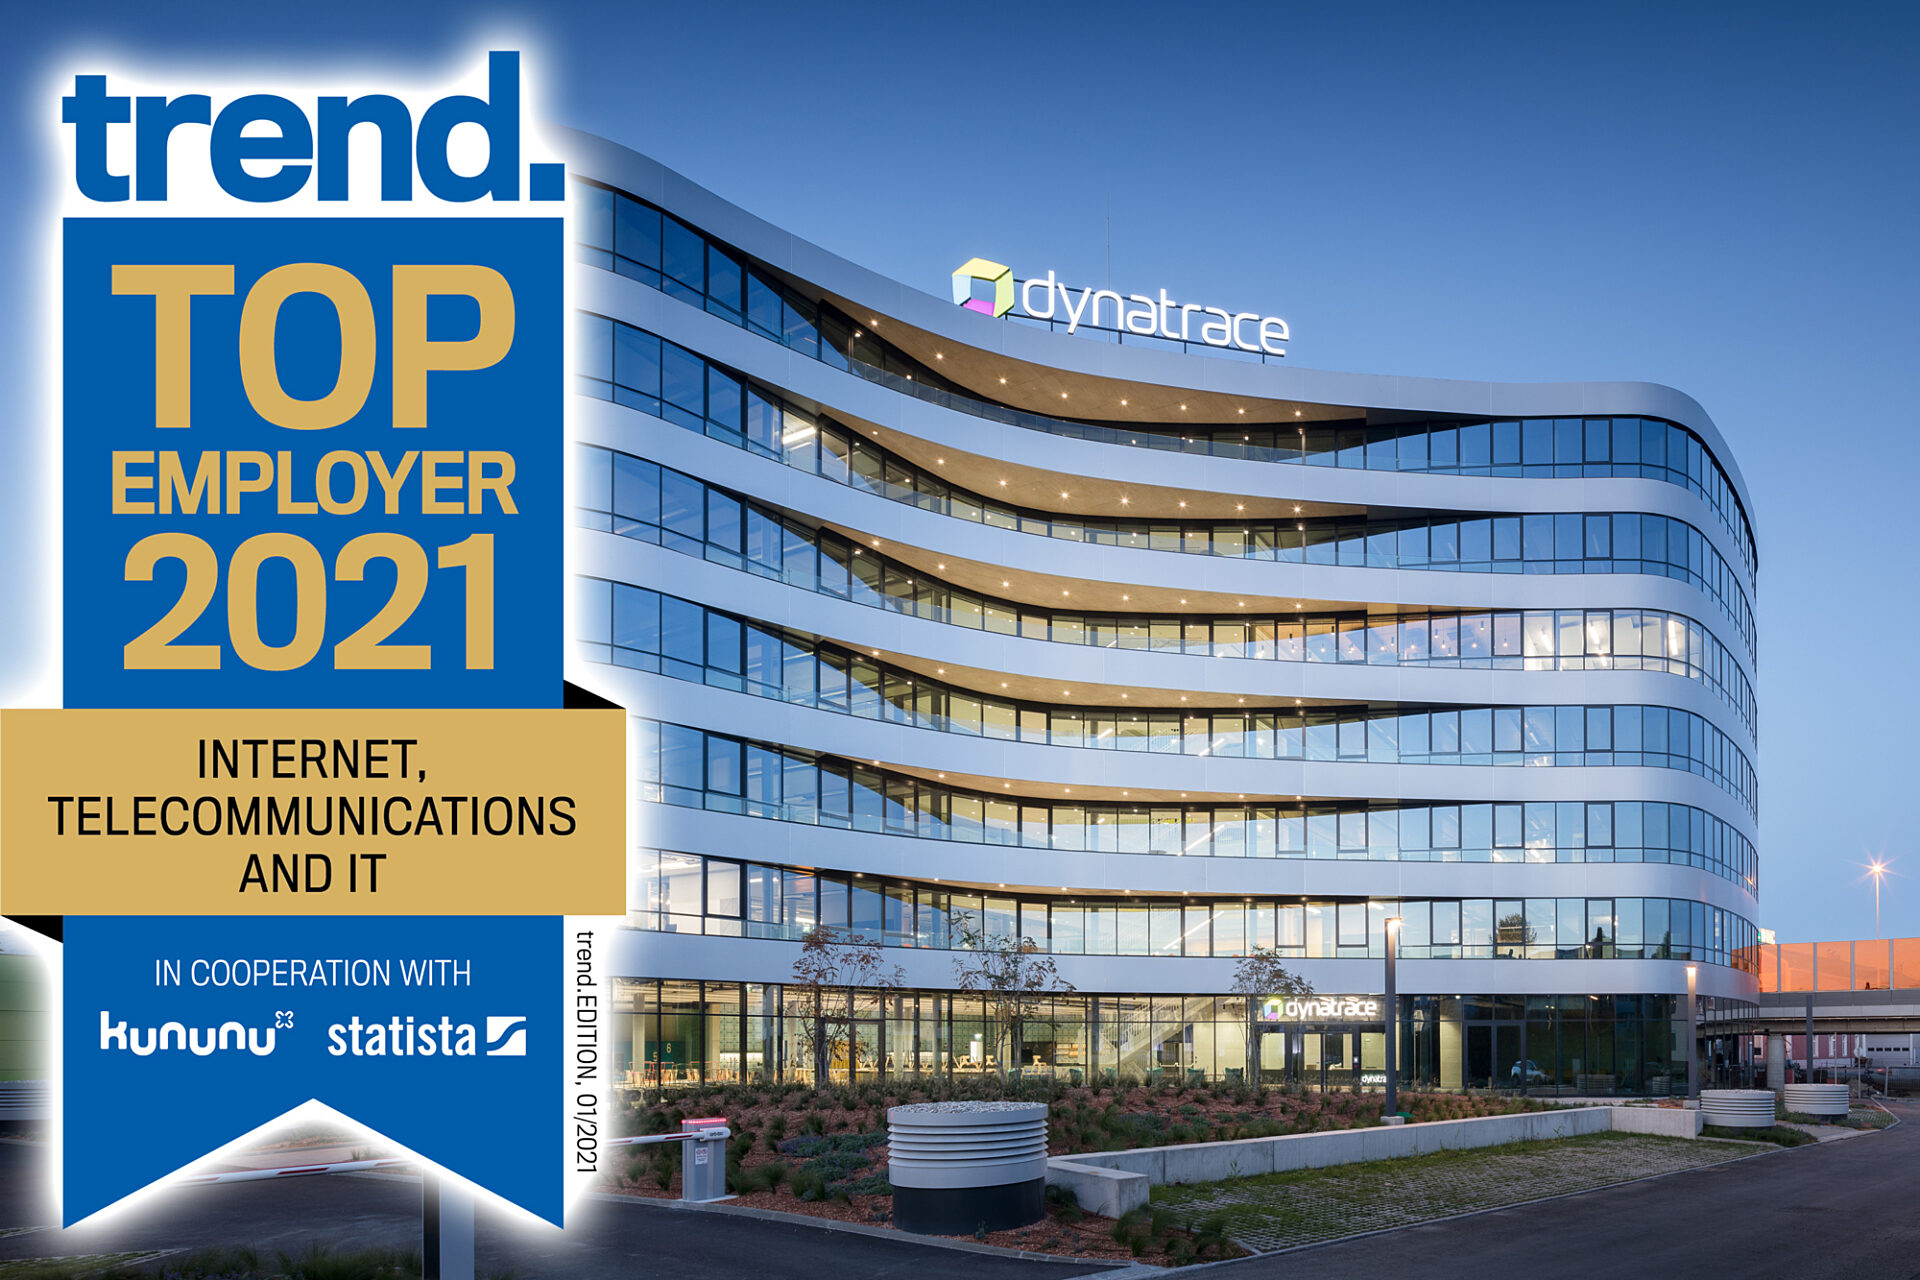 Dynatrace careers locations austria top employer